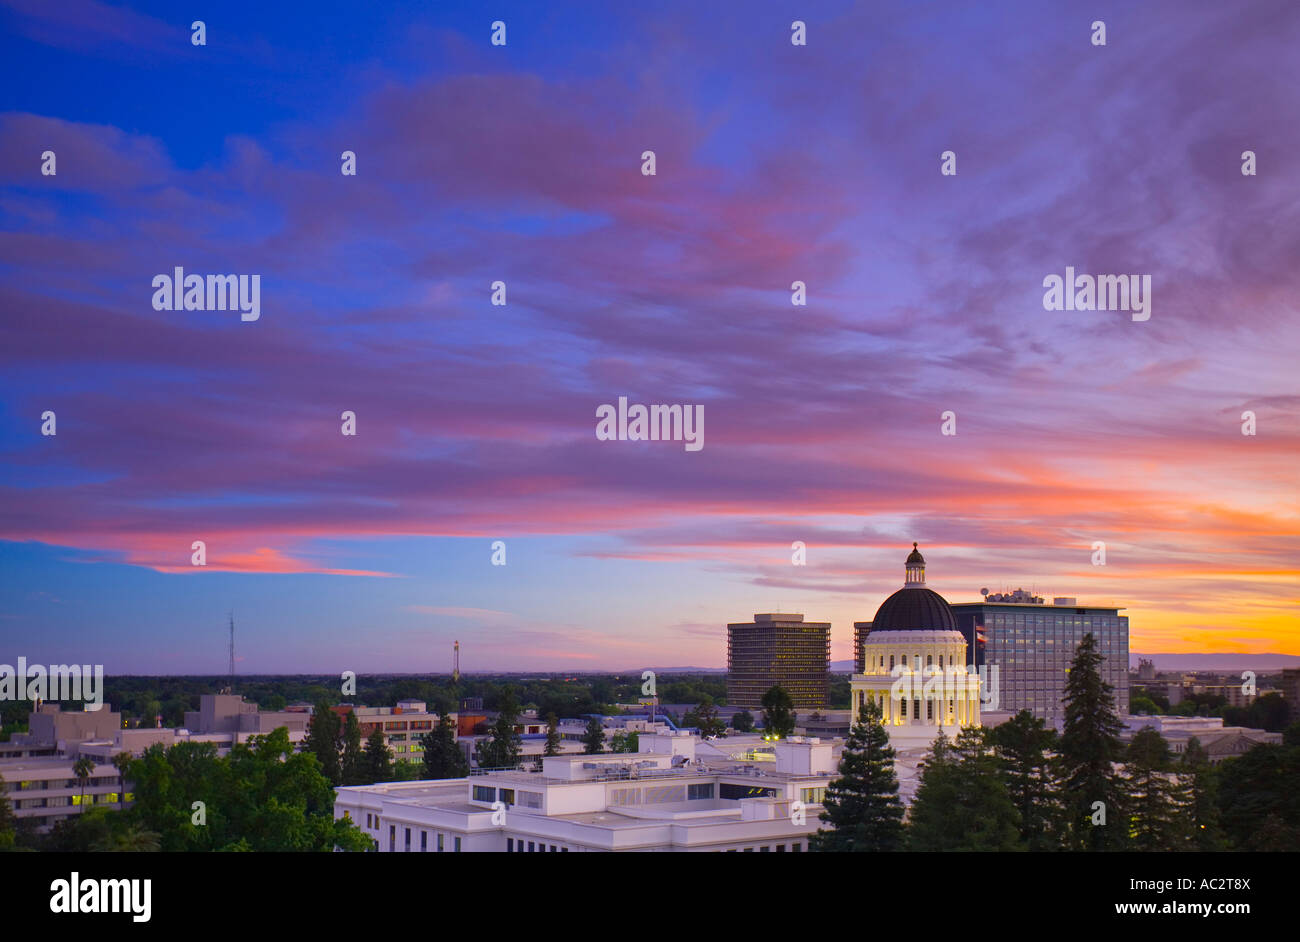 The California State Capitol building at sunset, Sacramento, California. Stock Photo